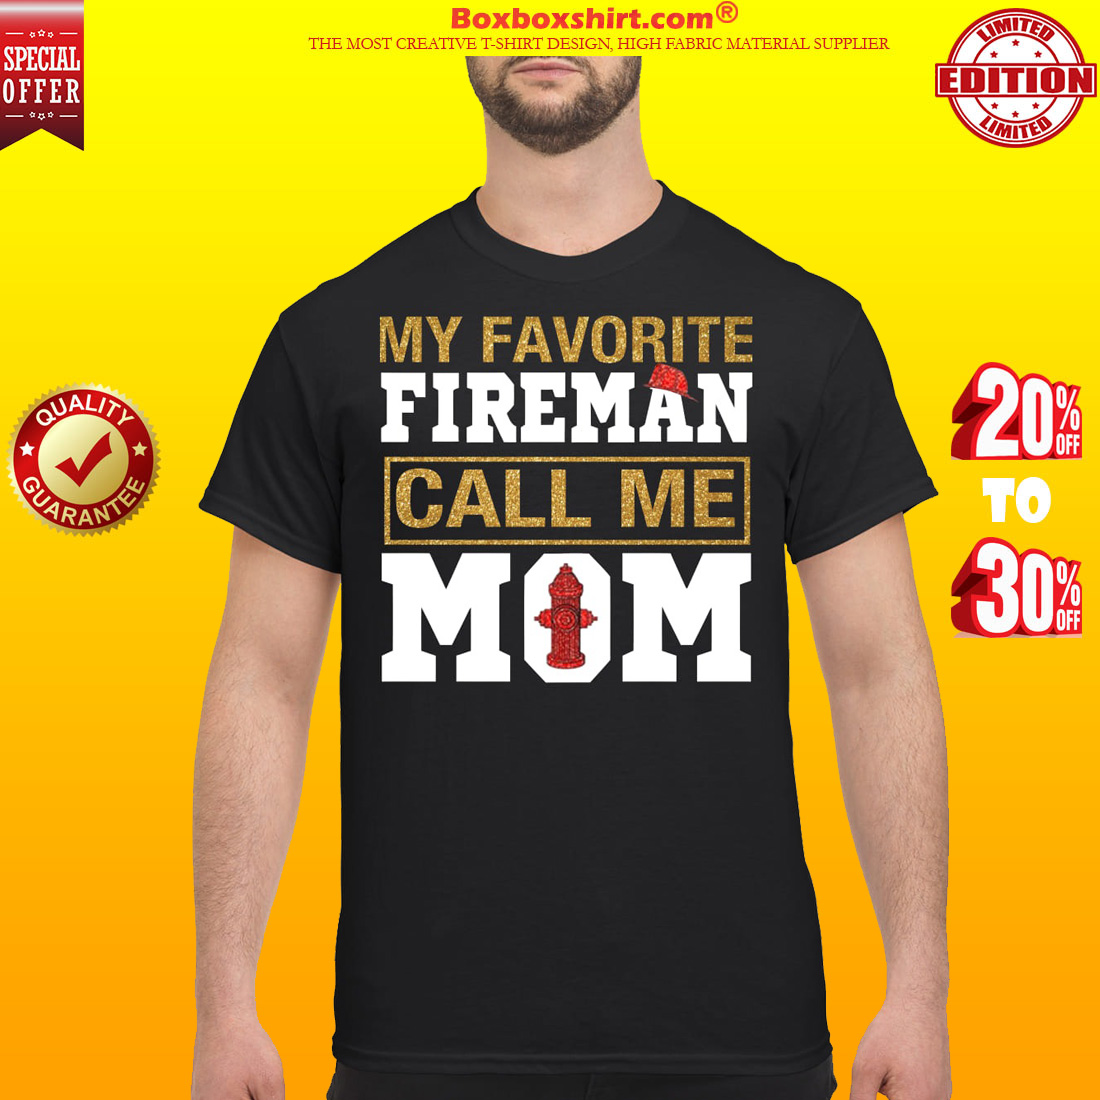 My favorite fireman call me mom shirt